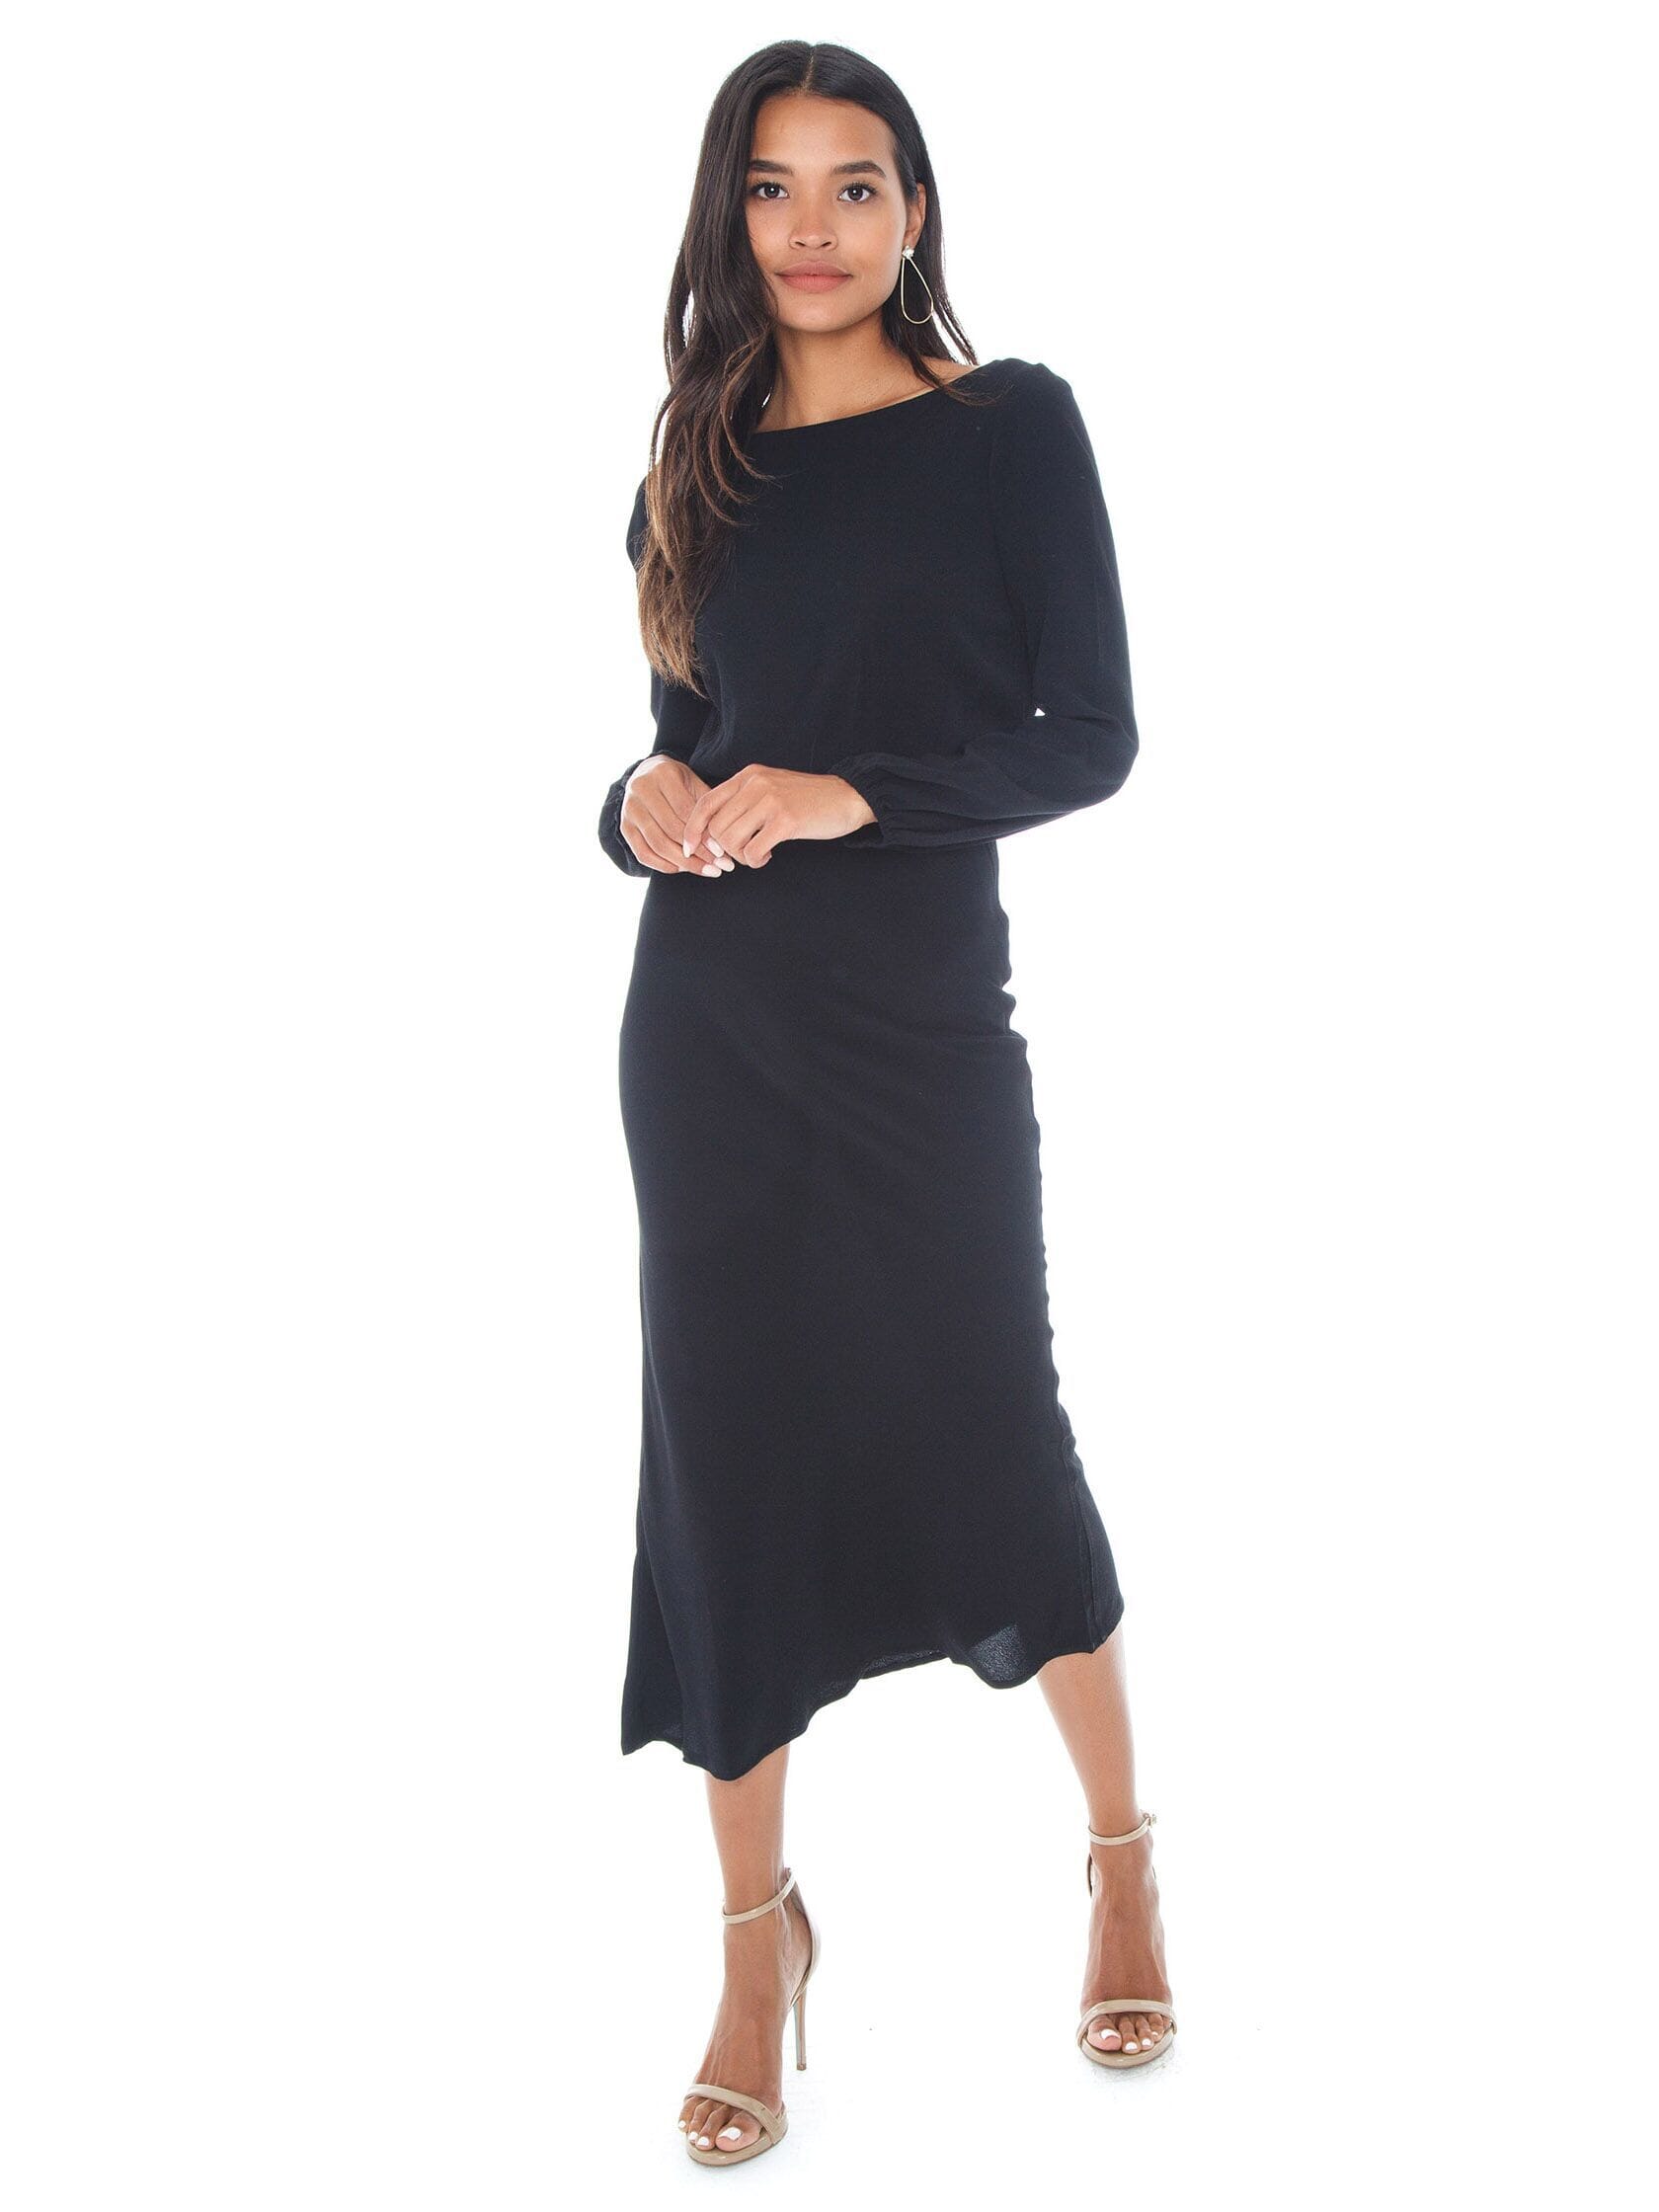 Flynn Skye | Mabel Midi Dress in Black| FashionPass